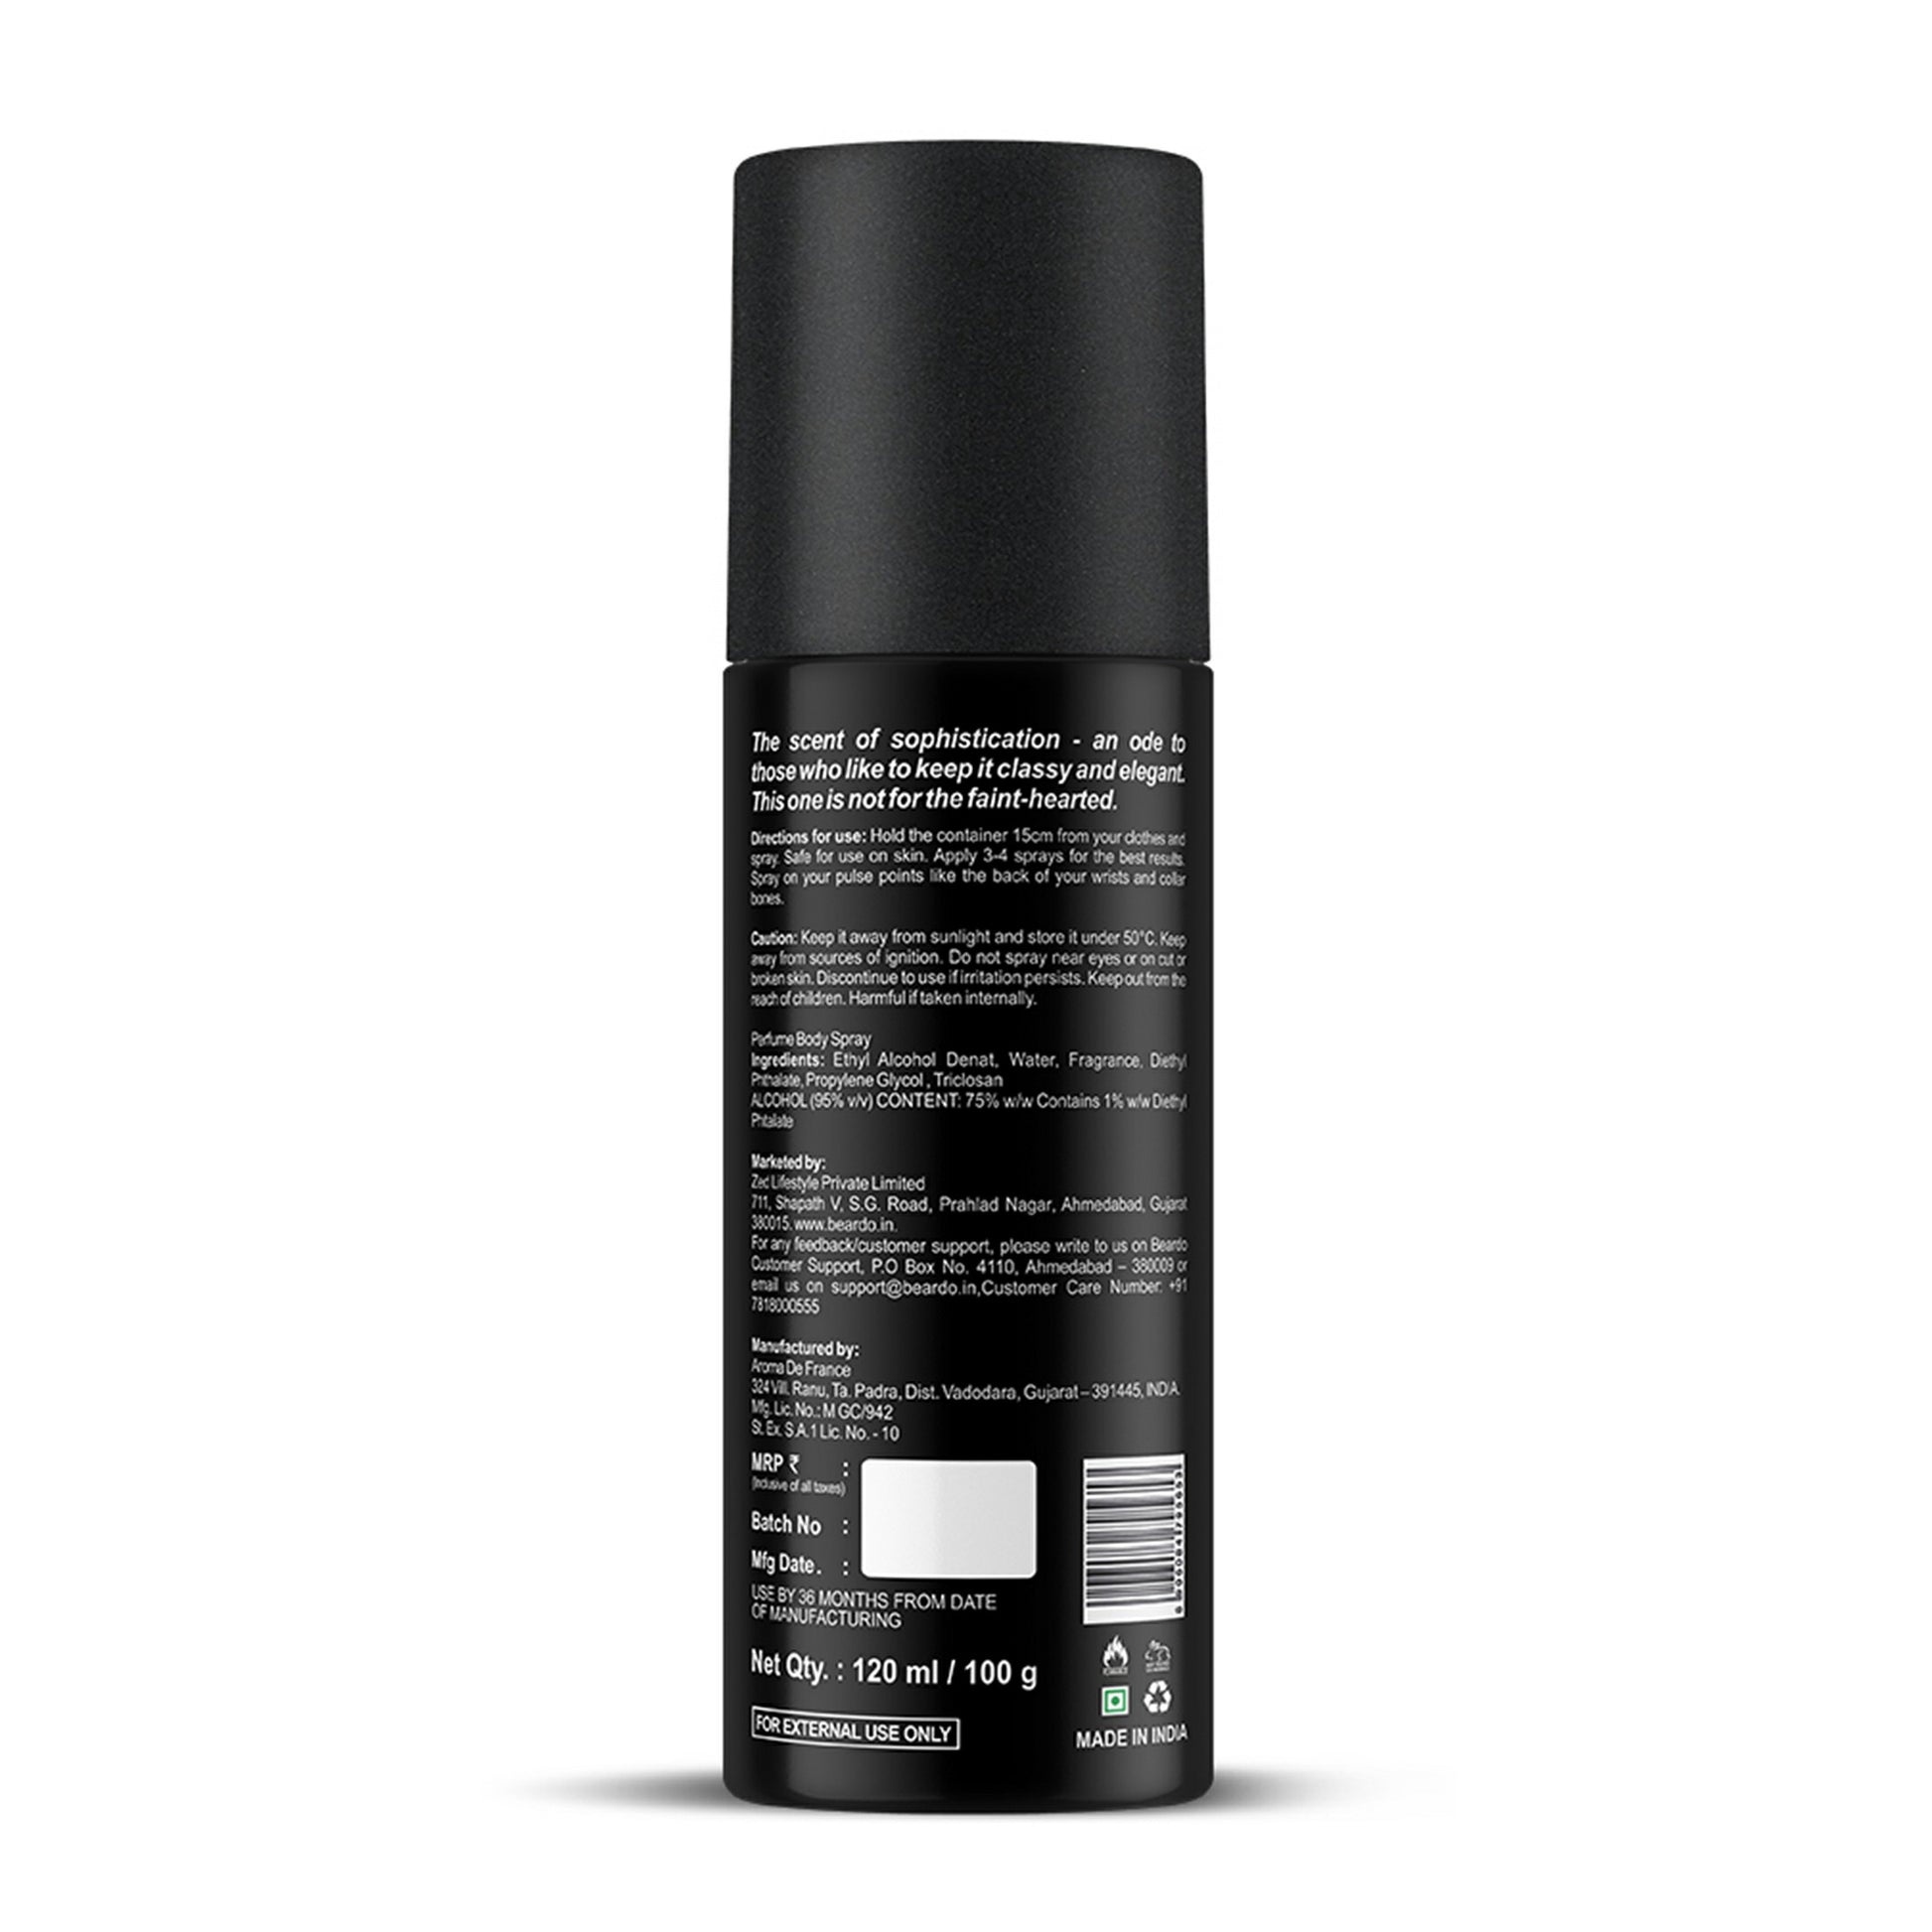 Beardo Iconic Perfume Body Spray Combo